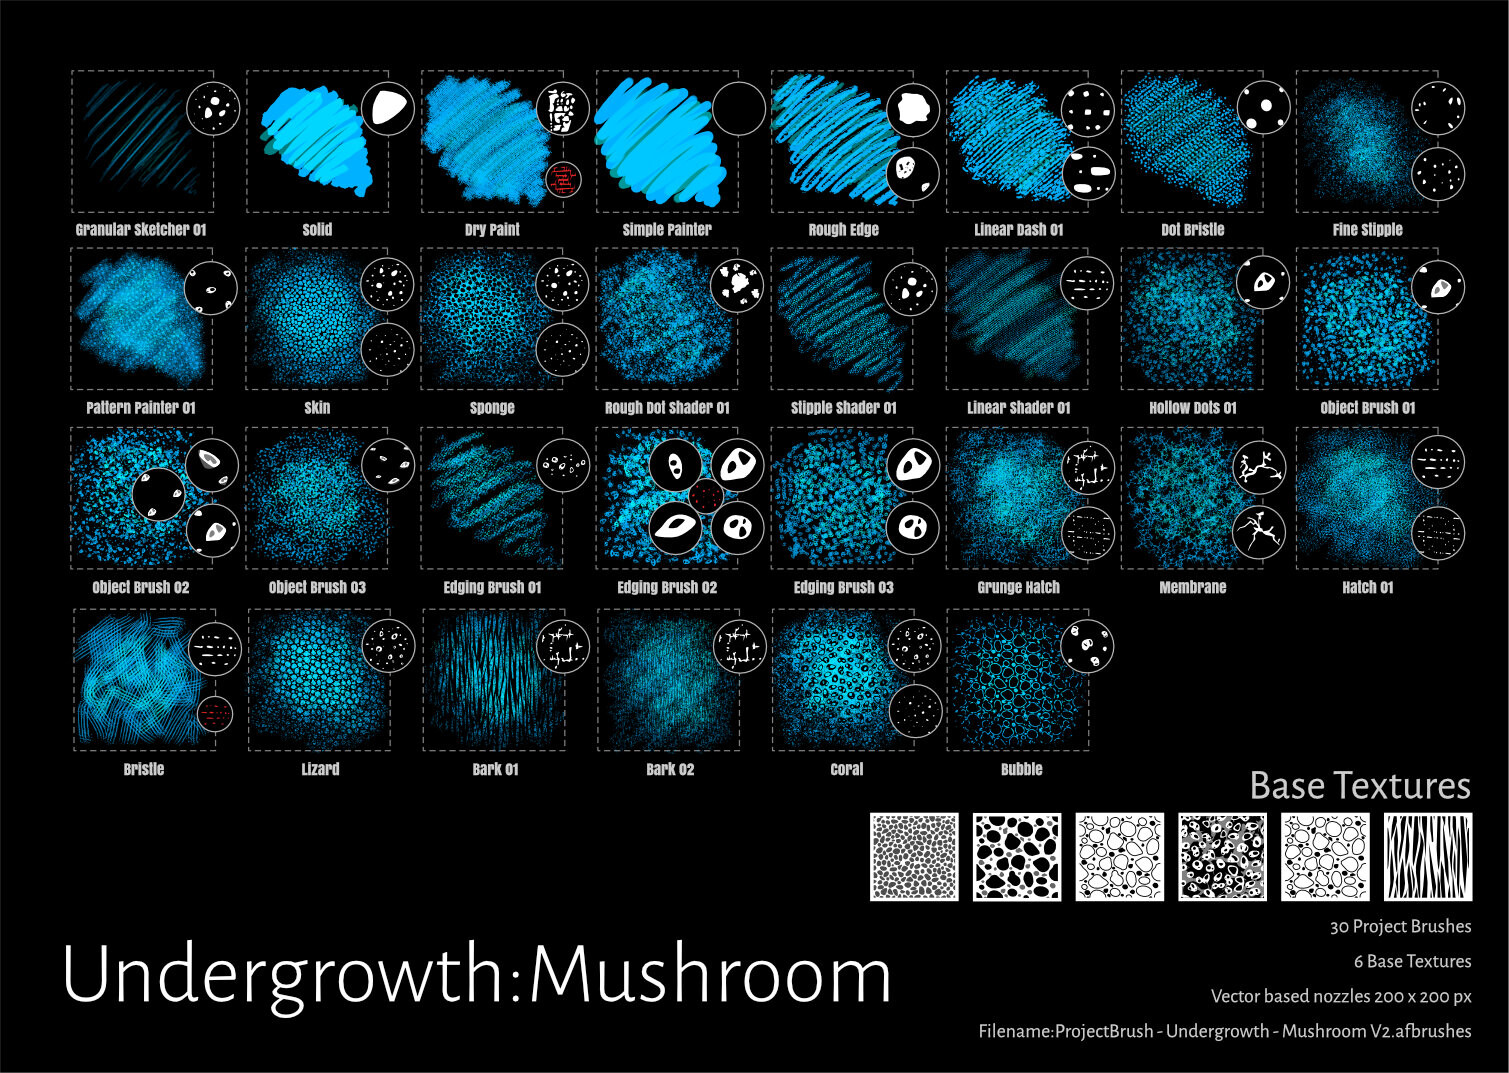 Undergrowth Mushroom
30 Raster Brushes and 6 base textures